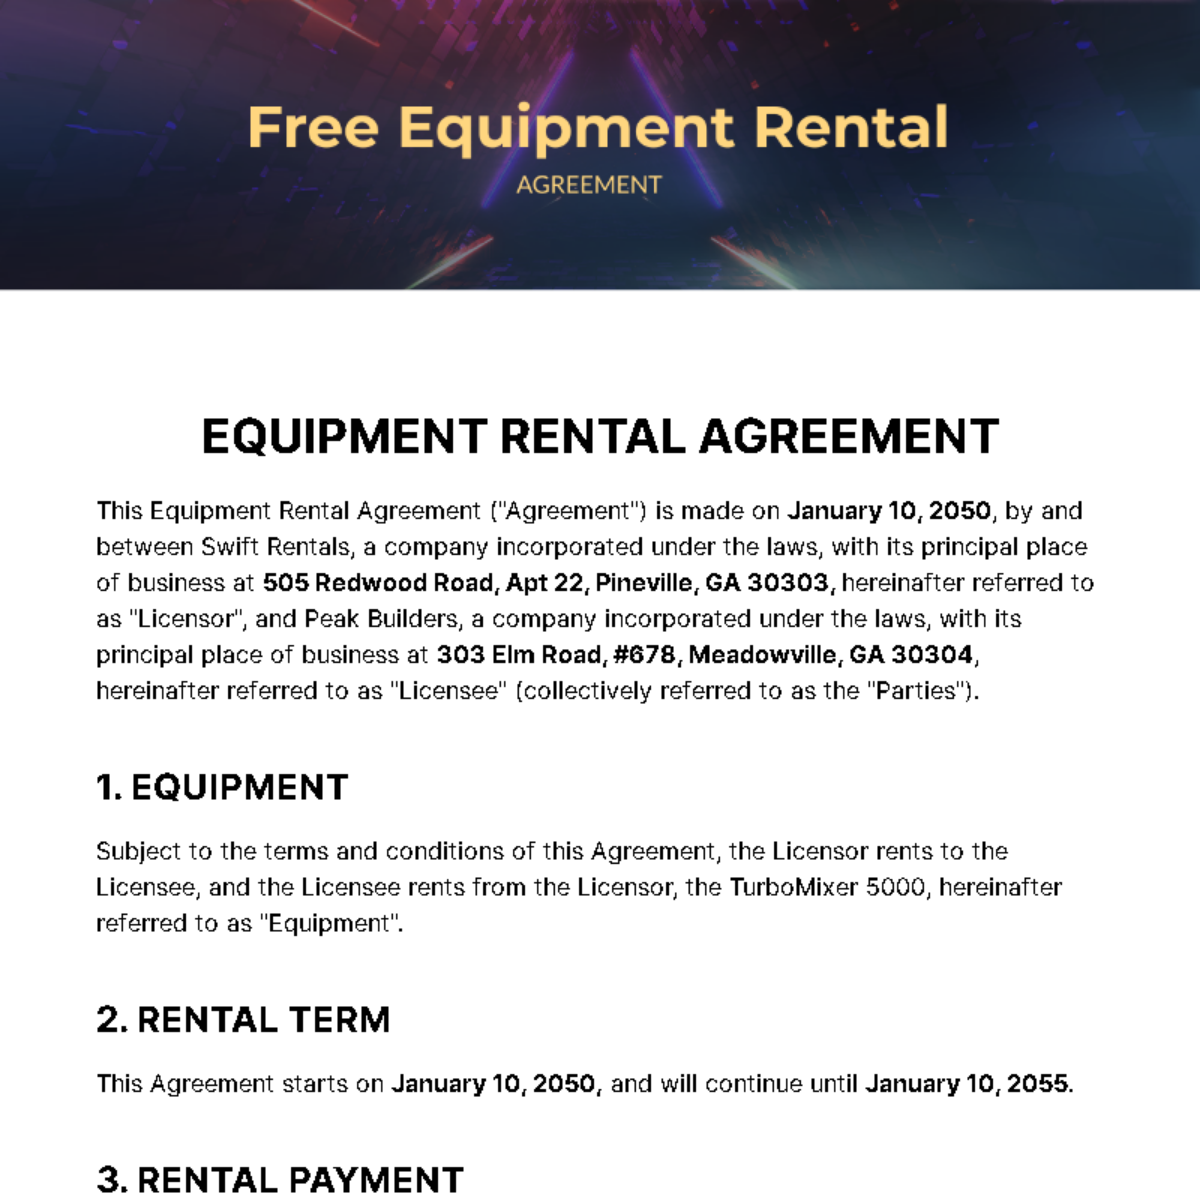 Equipment Rental Agreement Template